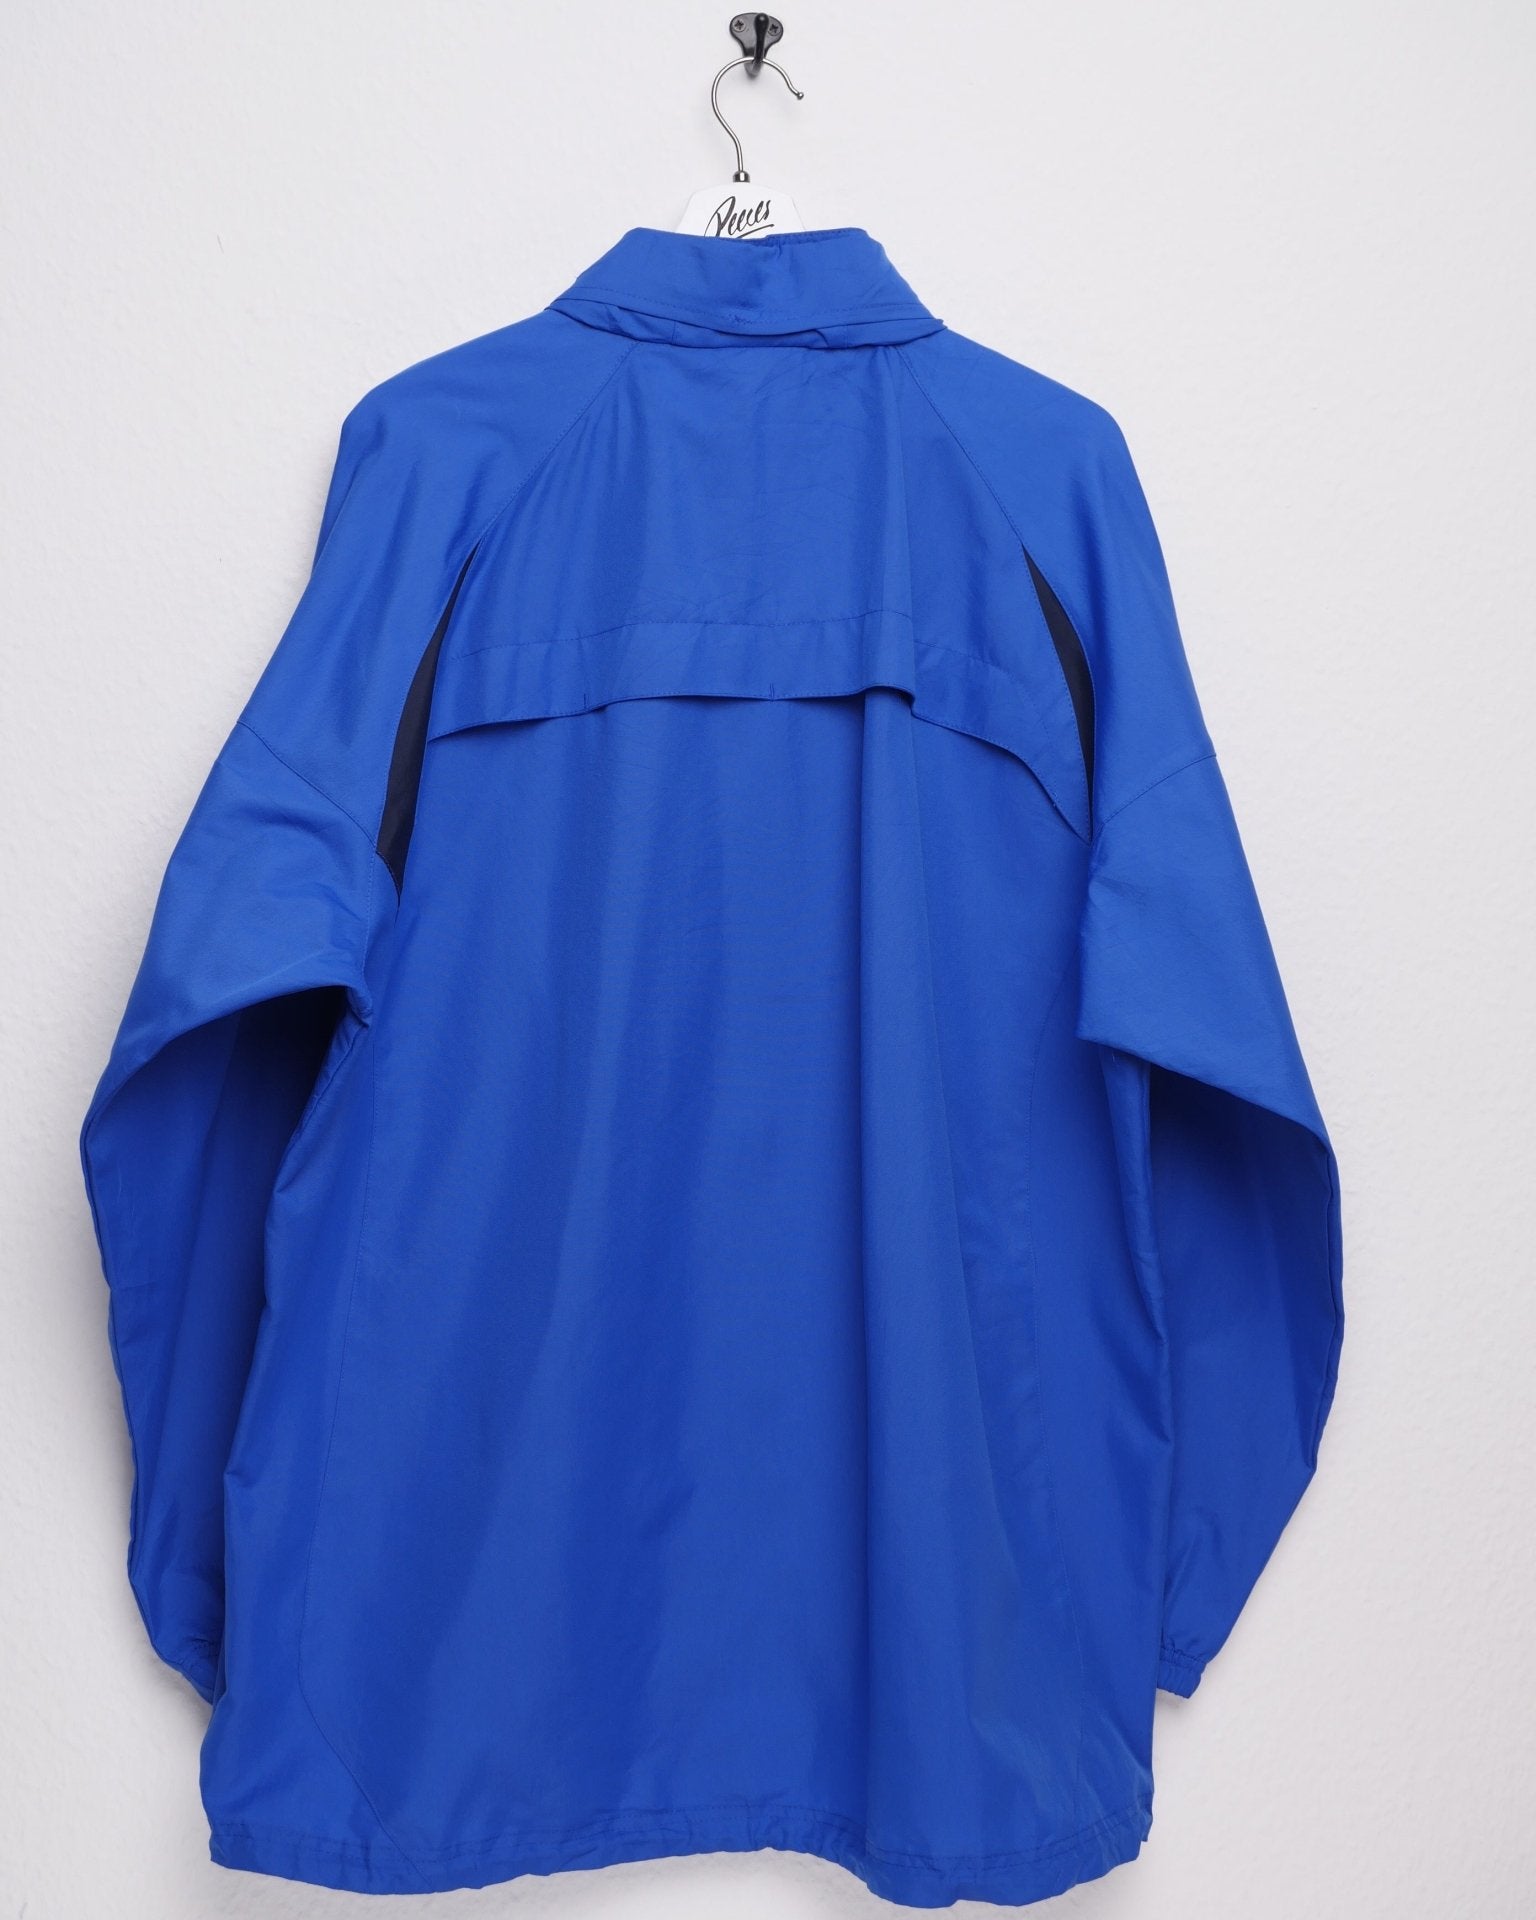 nike A.S. Poissy printed Logo blue Track Jacket - Peeces